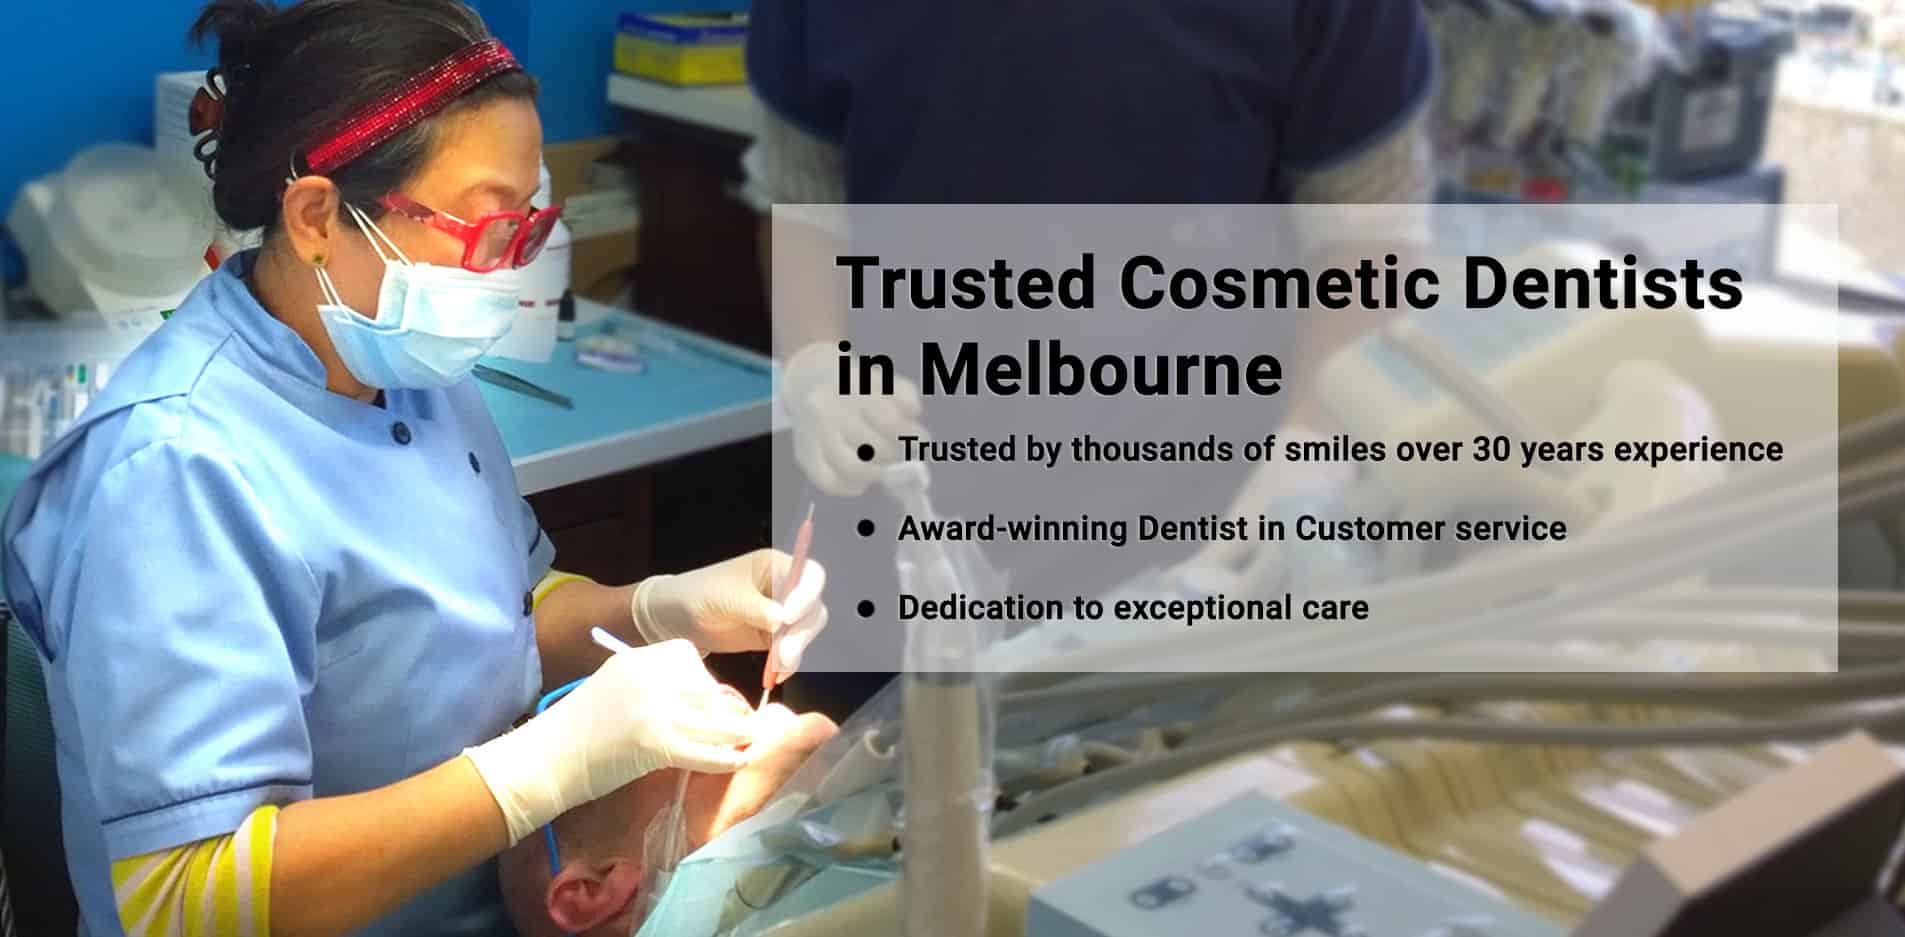 Best Dentist in Melbourne CBD Dr. Zenaidy Castro